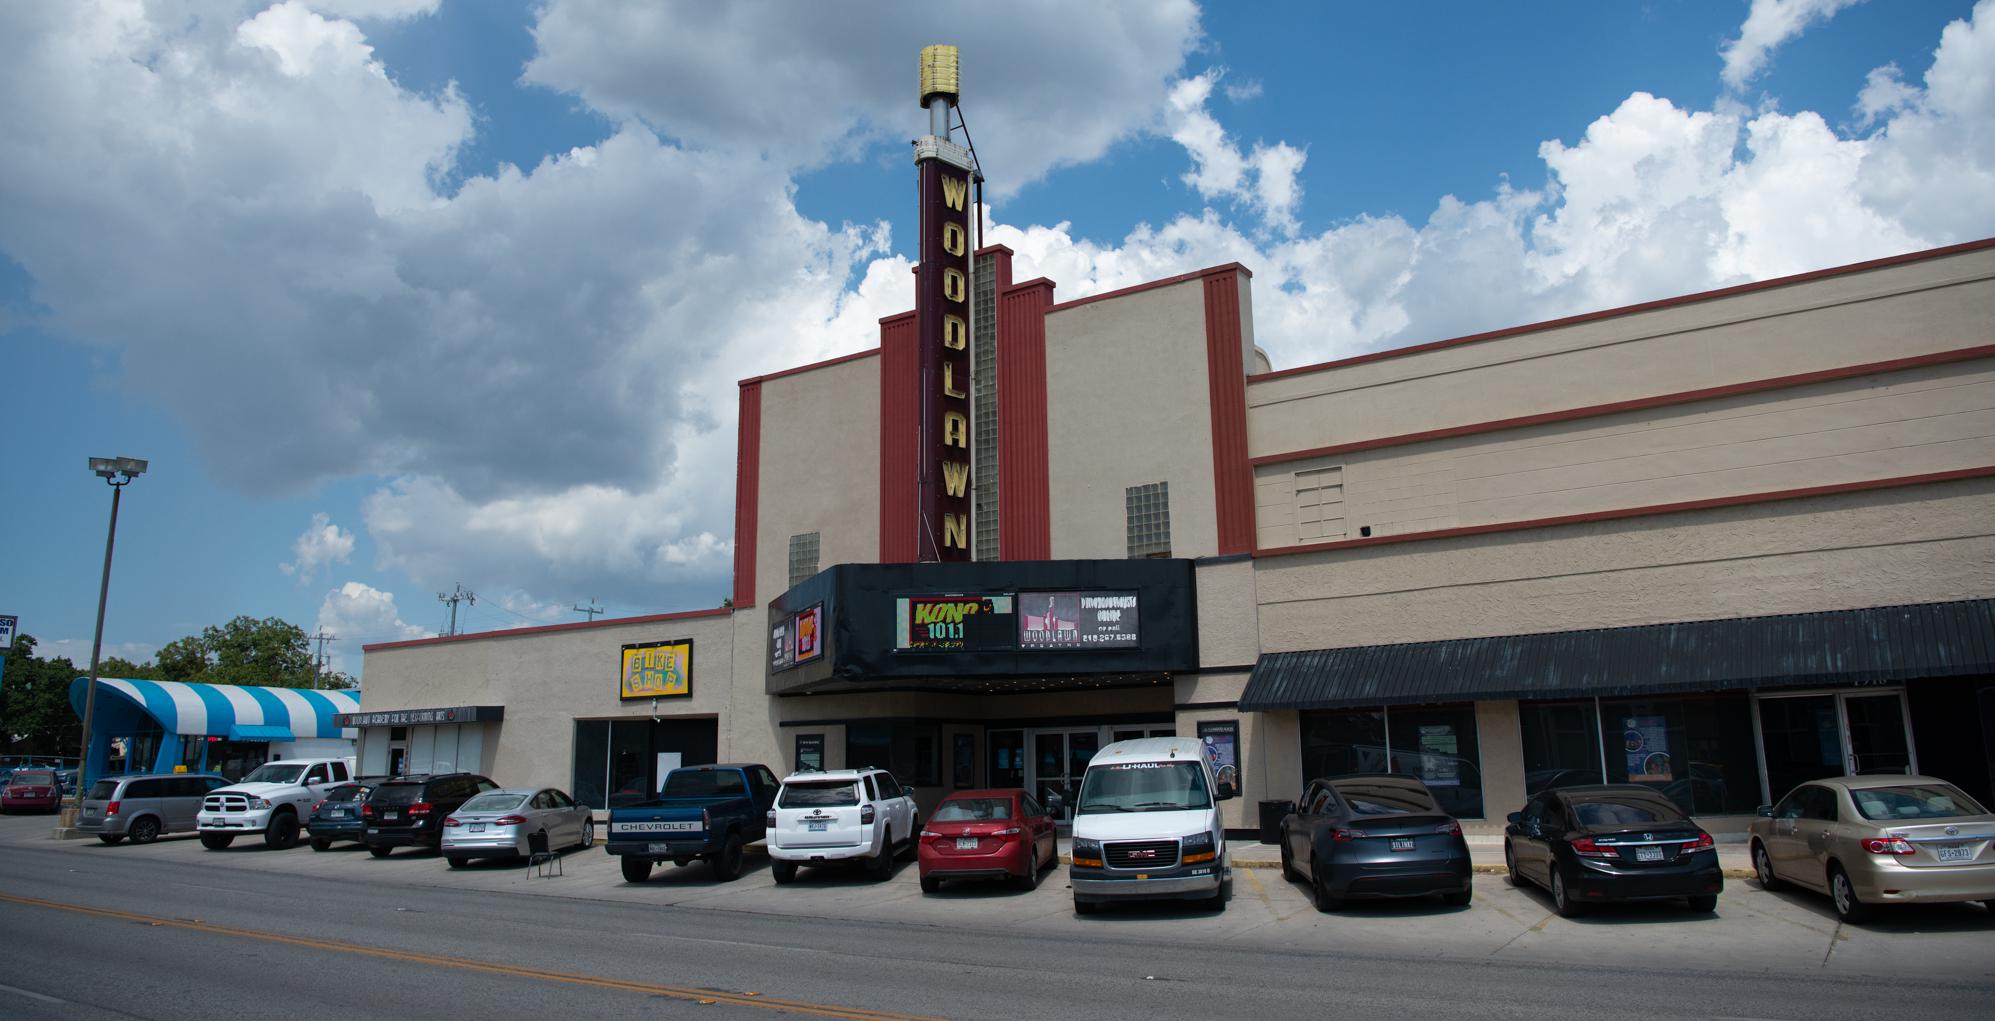 North Star Cinema I, II, III in San Antonio, TX - Cinema Treasures